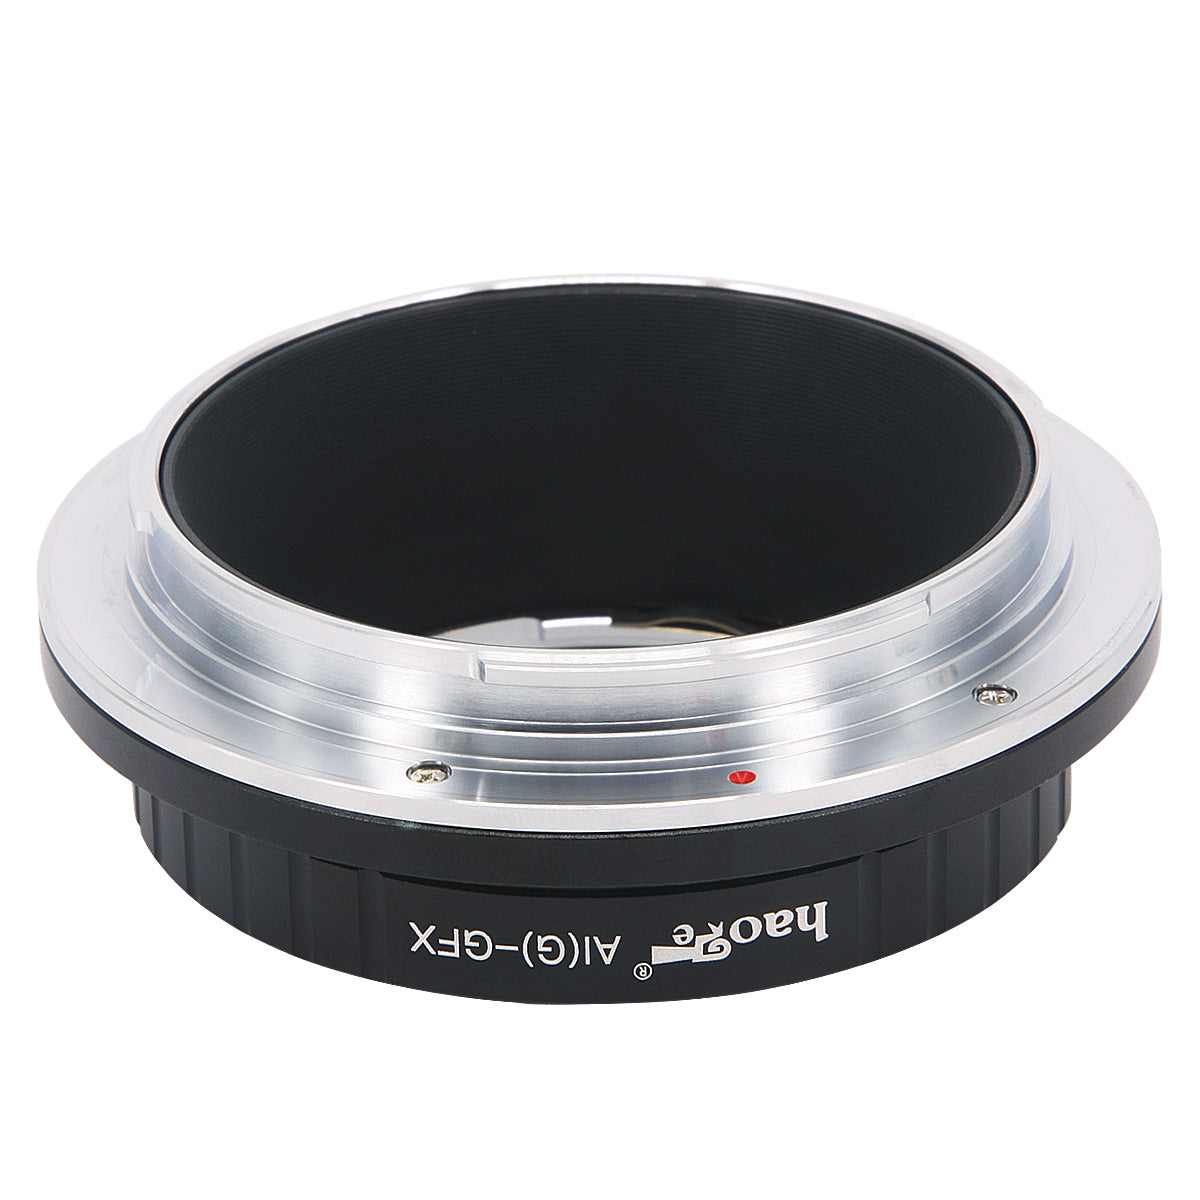 Haoge Manual Lens Mount Adapter for Nikon Nikkor AI / AIS / G / D Lens to Fujifilm Fuji GFX mount Camera such as GFX 50s